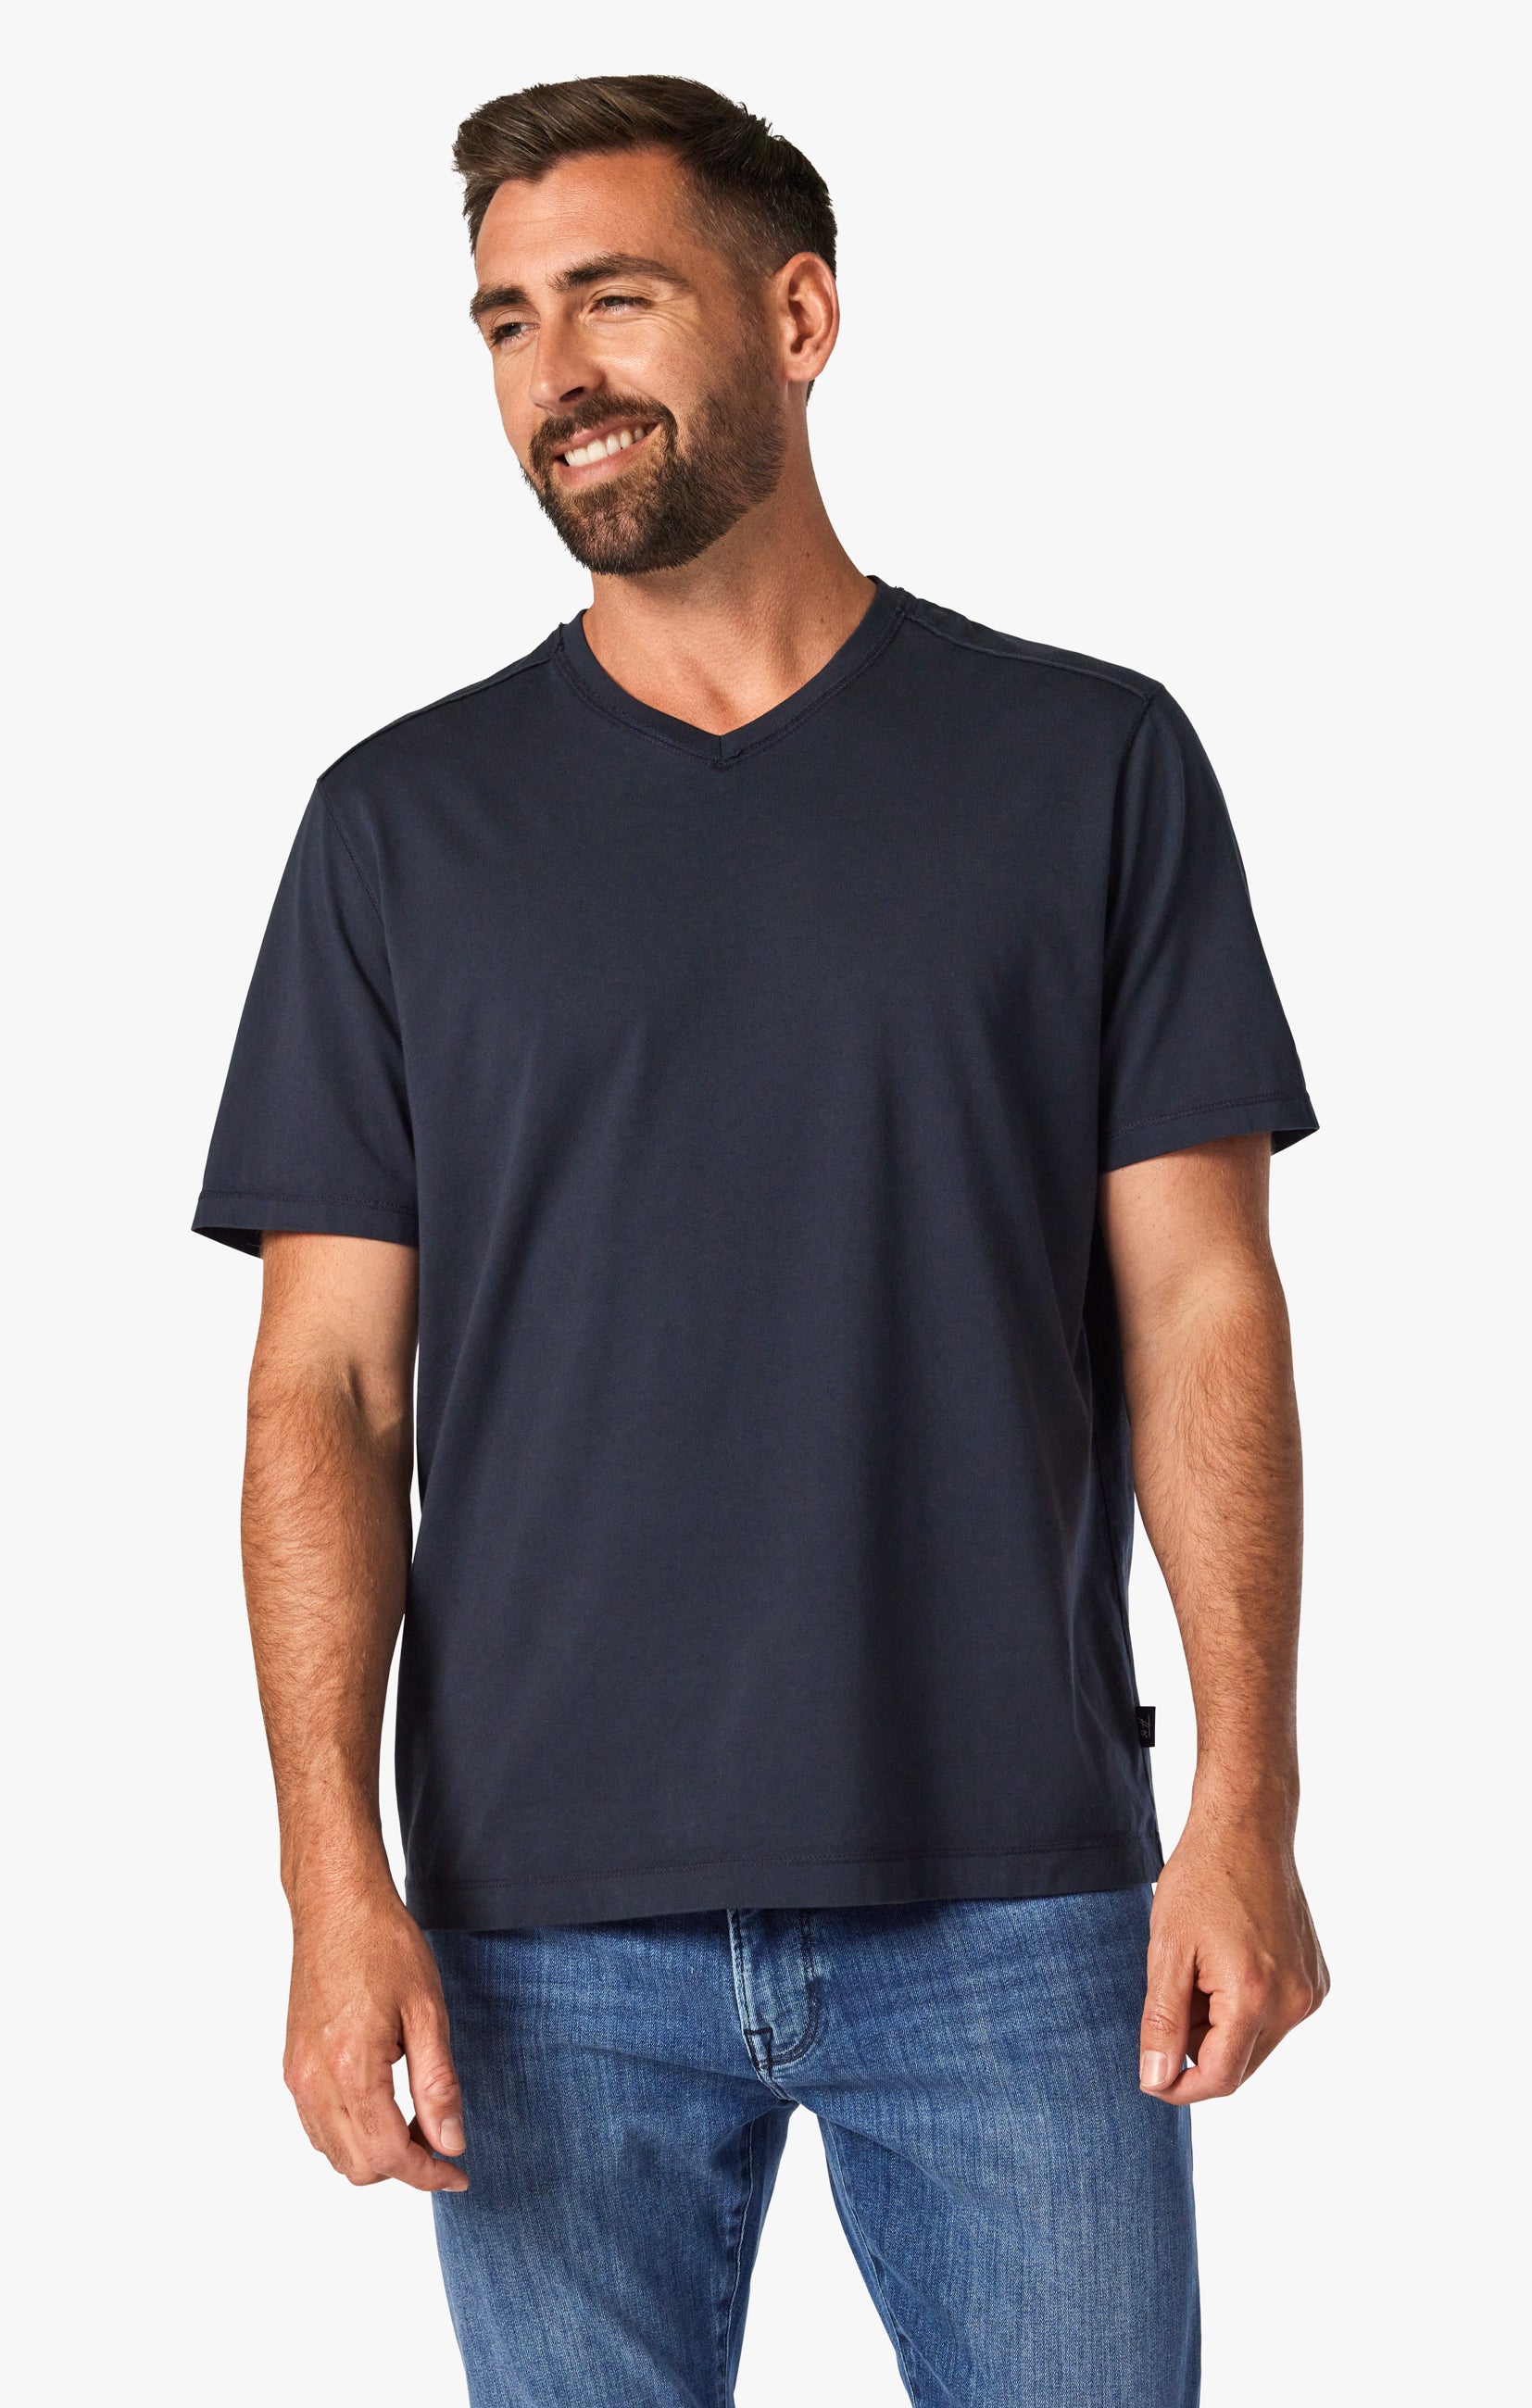 Deconstructed V-Neck T-Shirt in Dark Navy Image 1